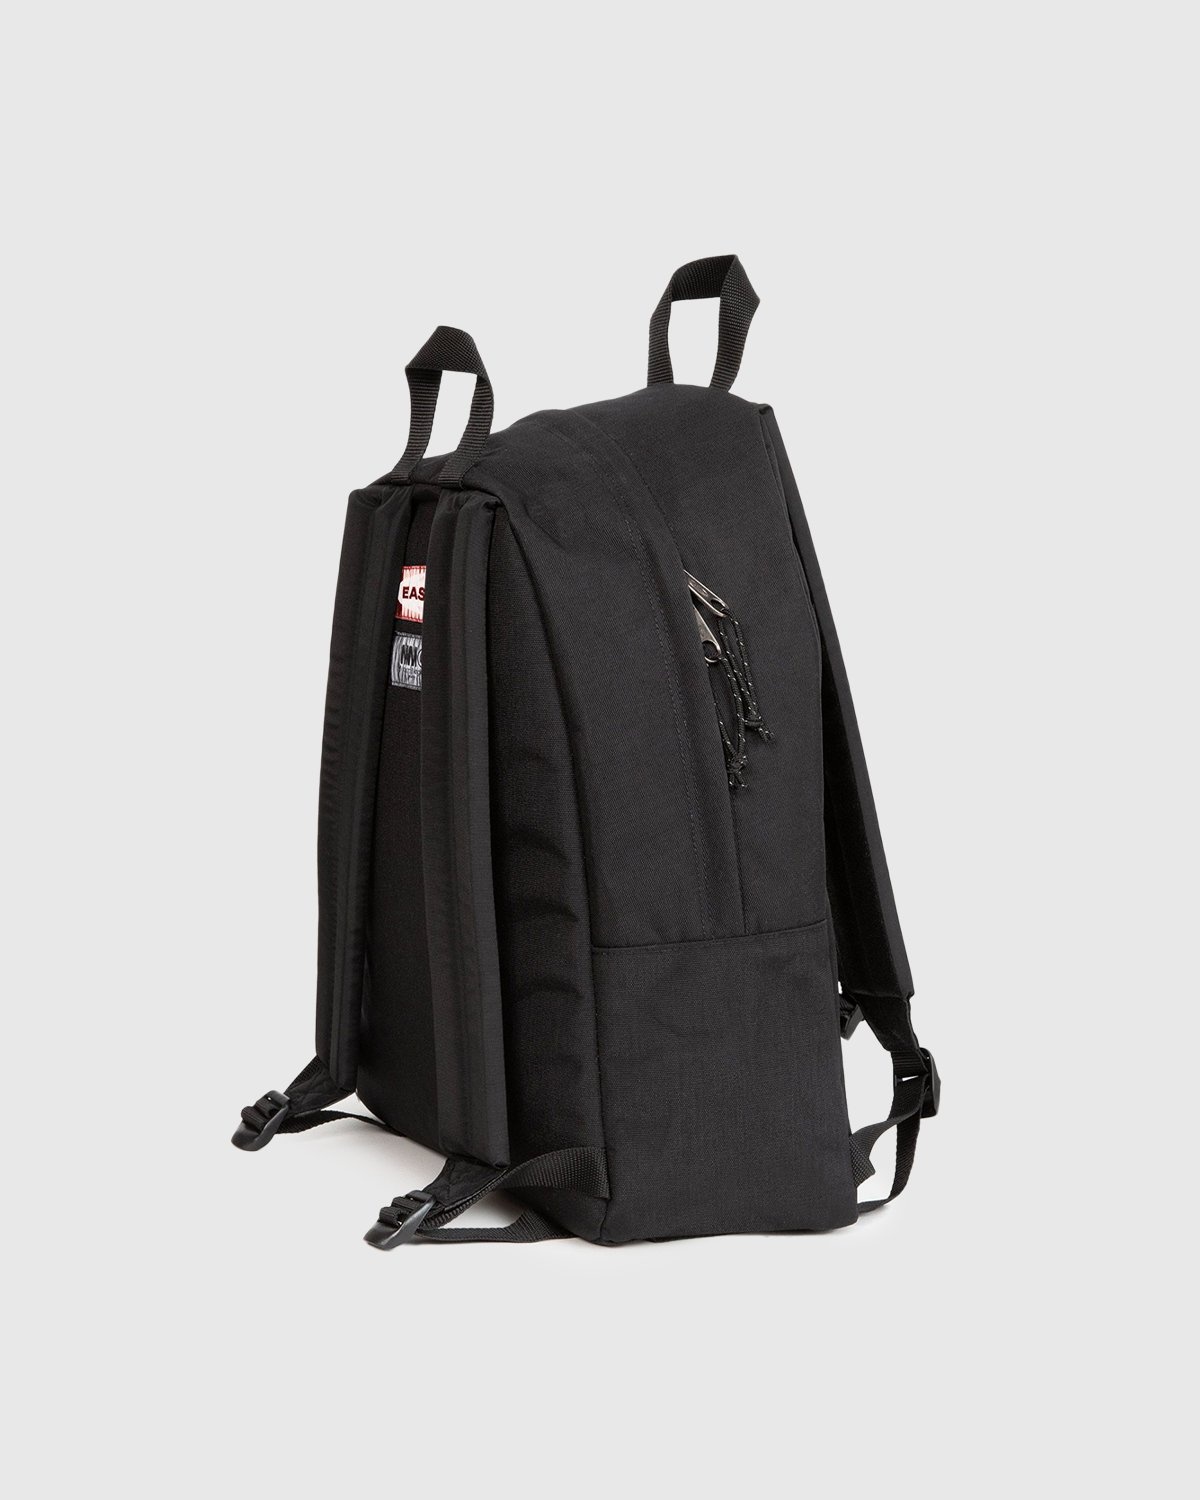 MM6 Maison Margiela x Eastpak – Padded XL Backpack Black - Backpacks - Black - Image 2